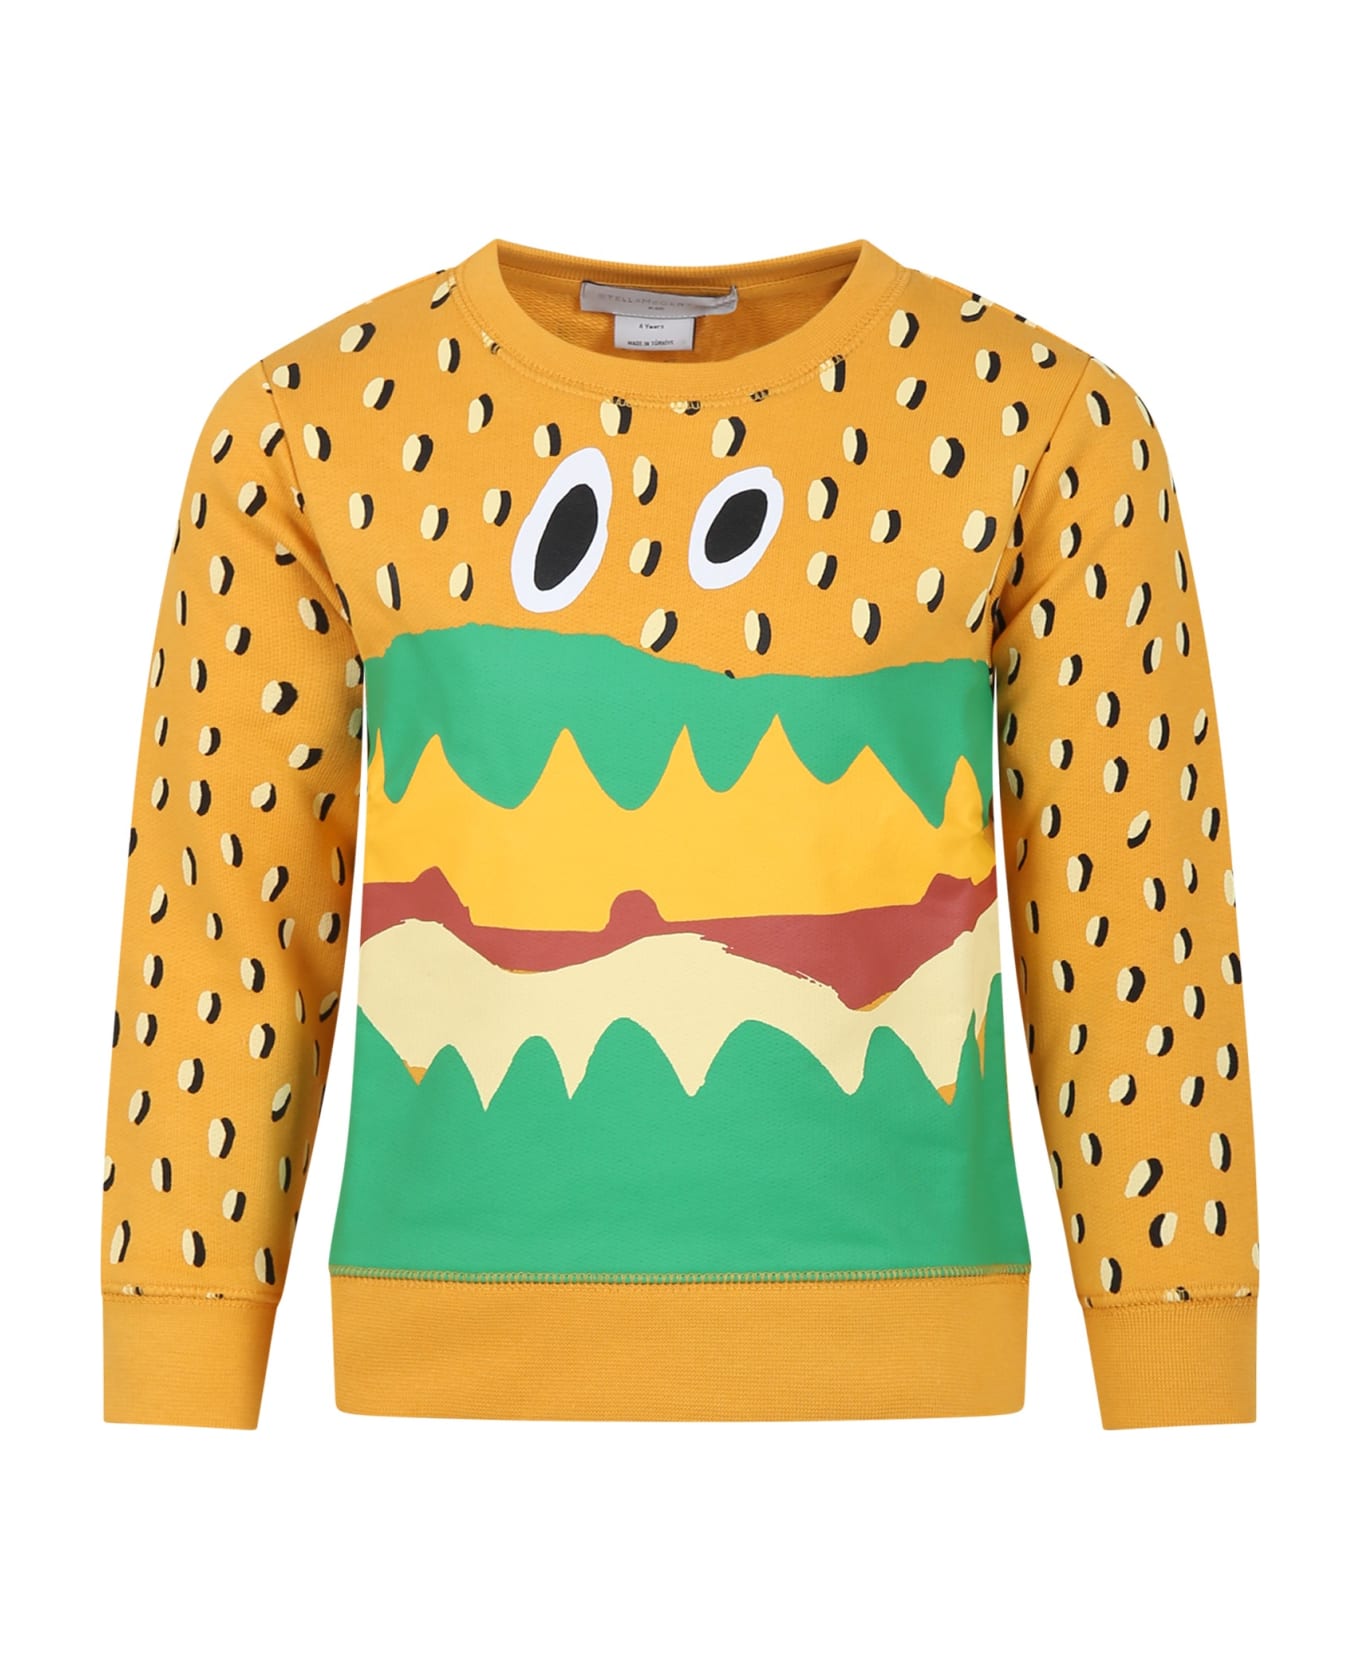 Stella McCartney Kids Yellow Sweatshirt For Boy With Hamburger Print - Yellow